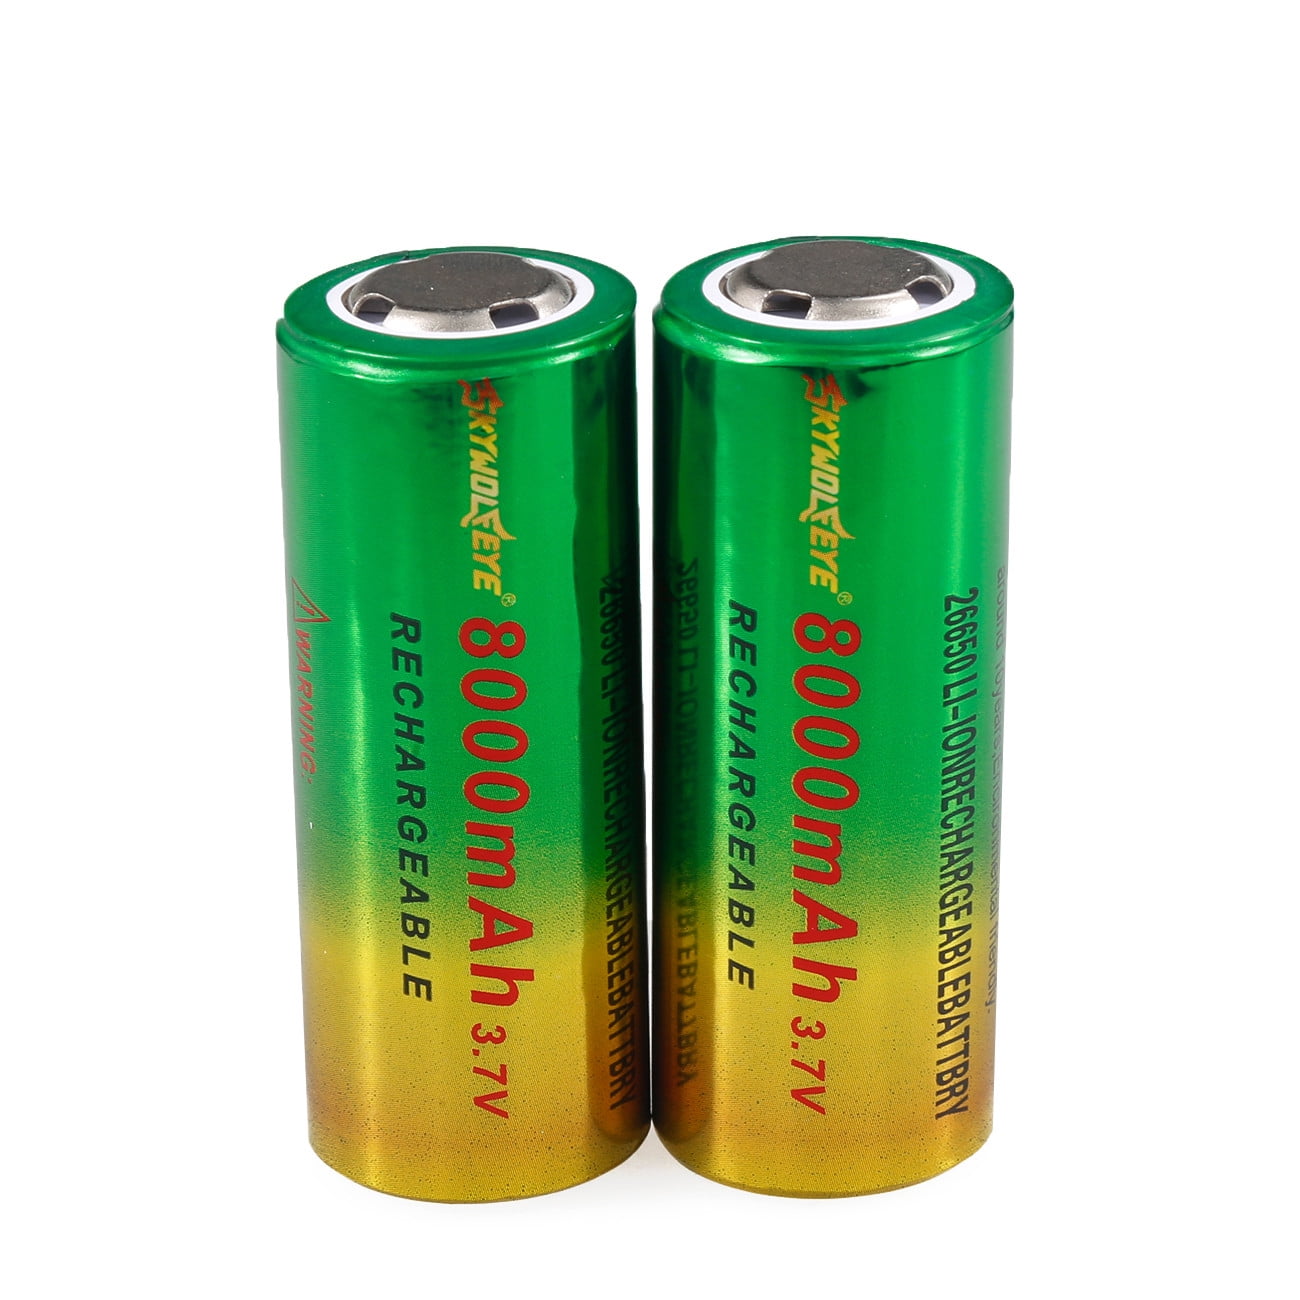 Batterie rechargeable AAA 1.5V 8800 mah, rechargeable, nouveau